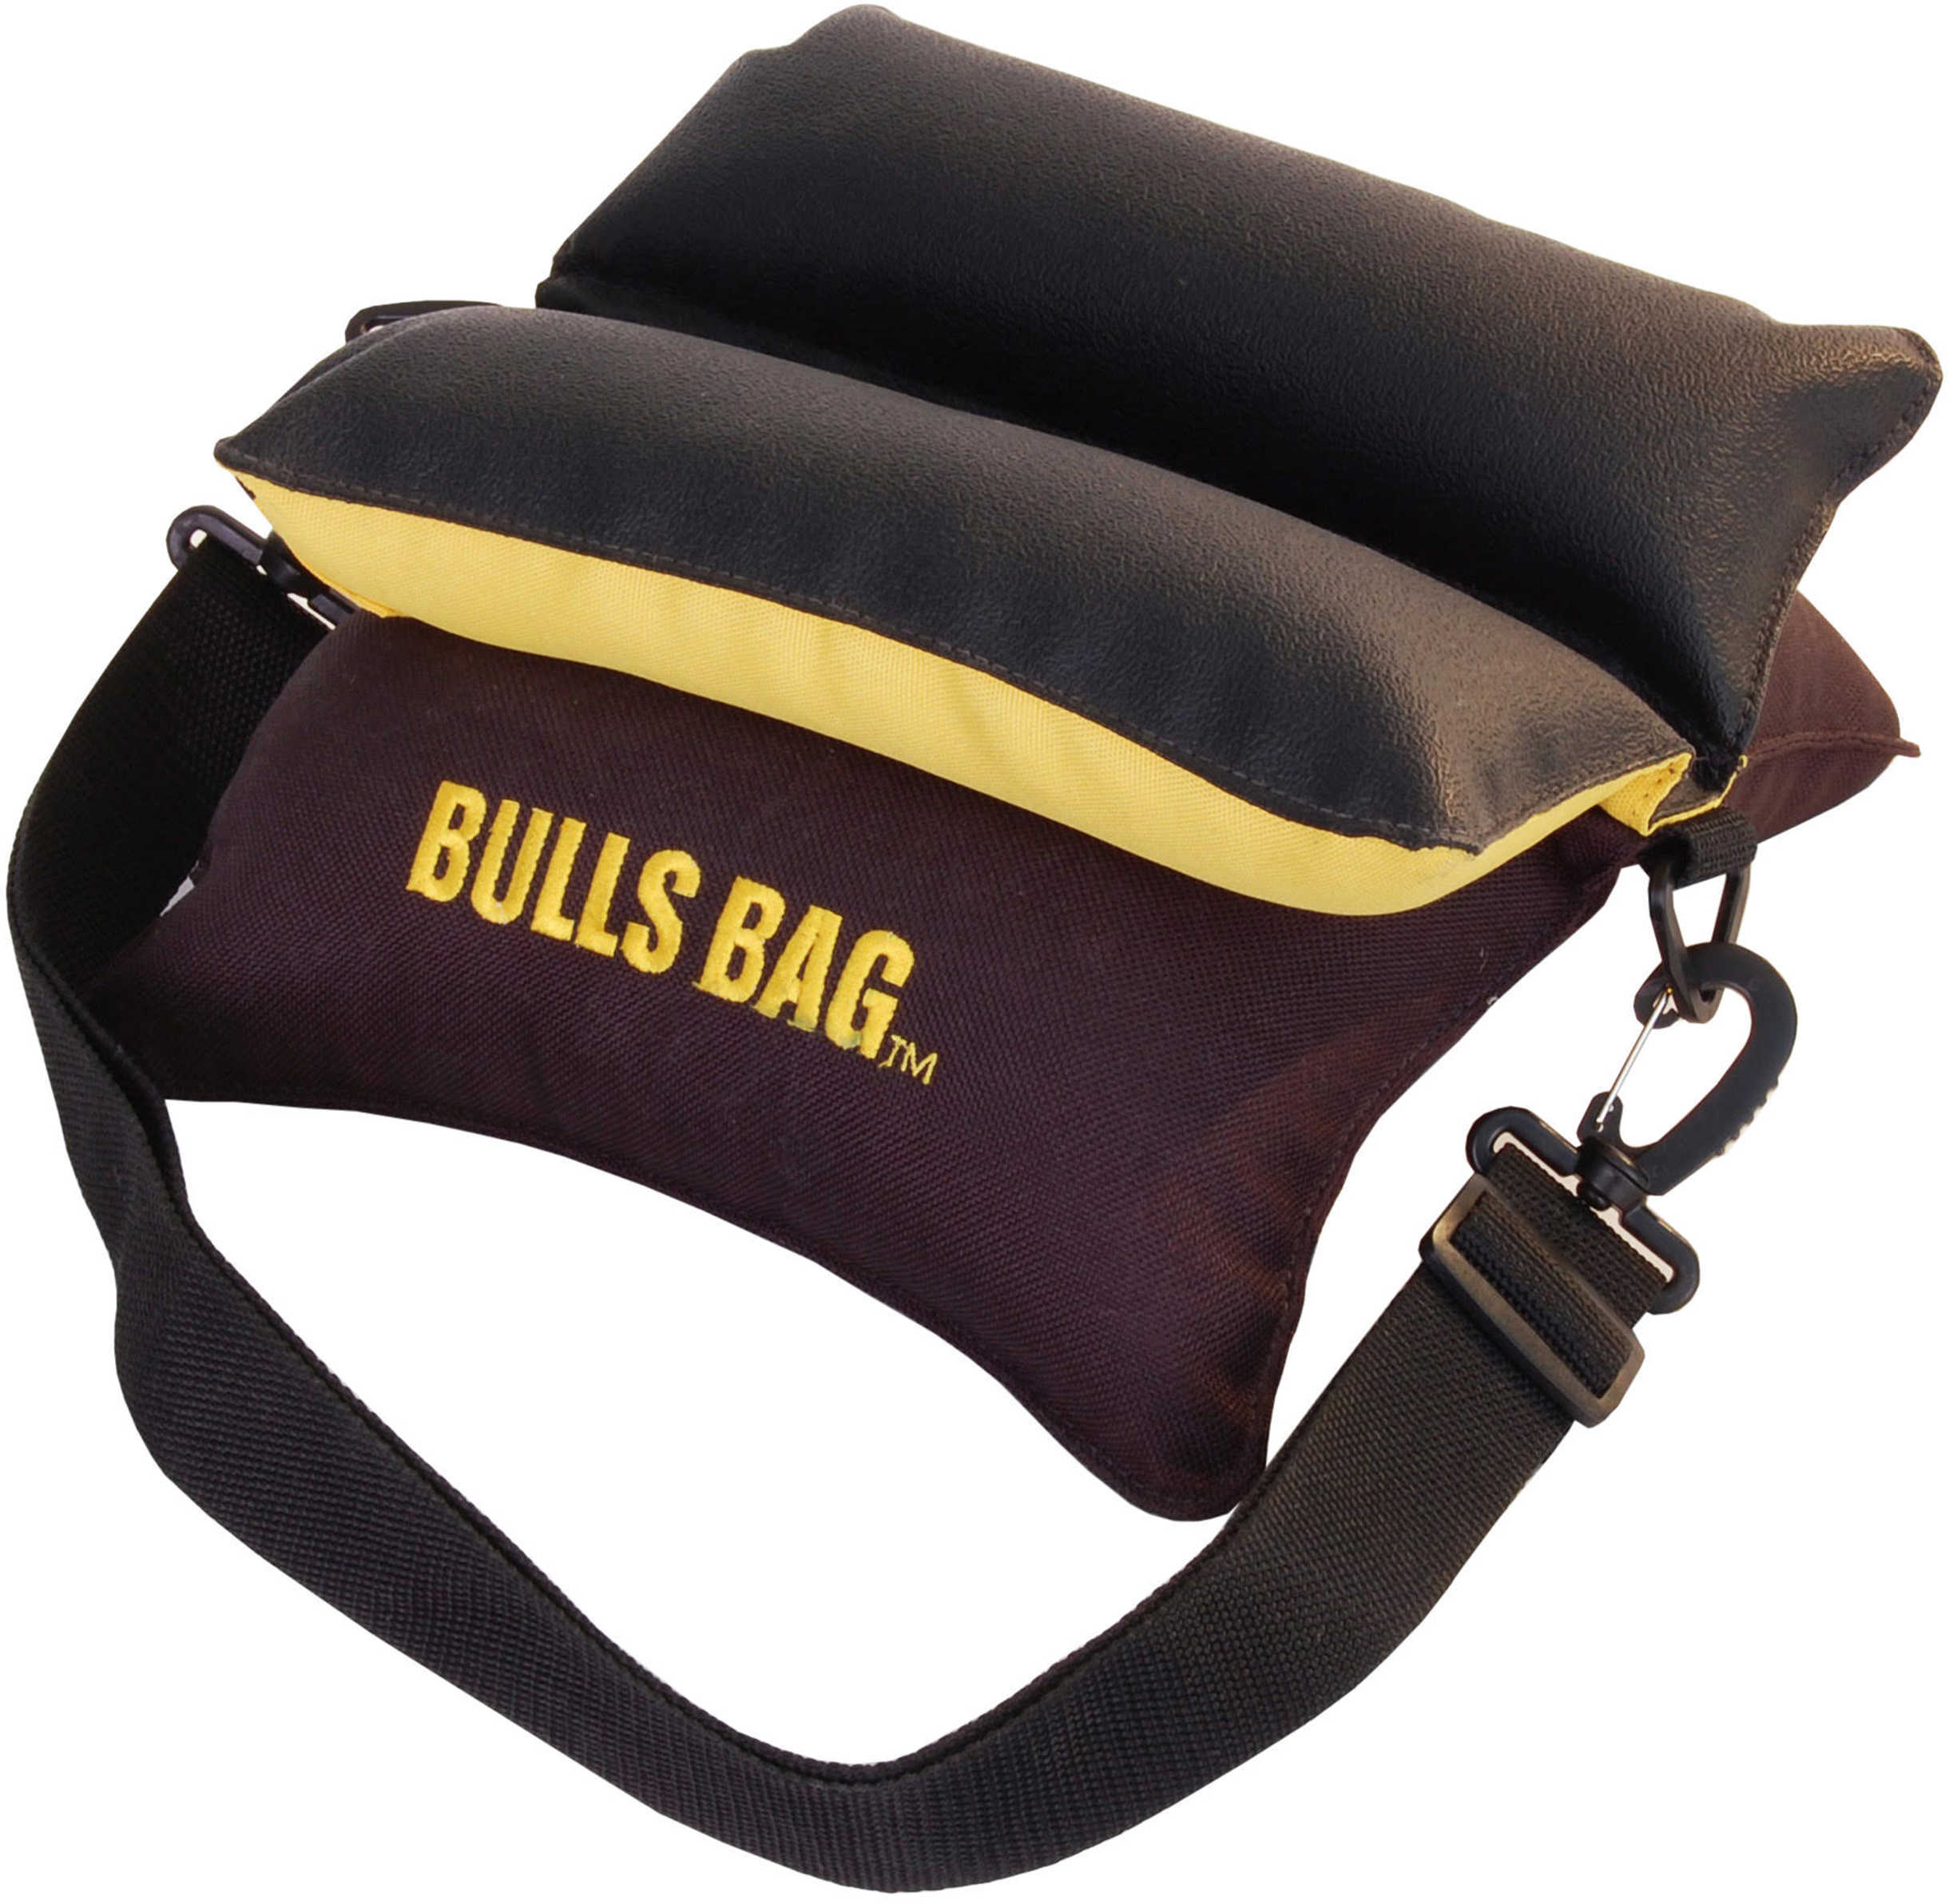 Uncle Buds CSS 10" Black/Gold Bulls Bag Rest 16012